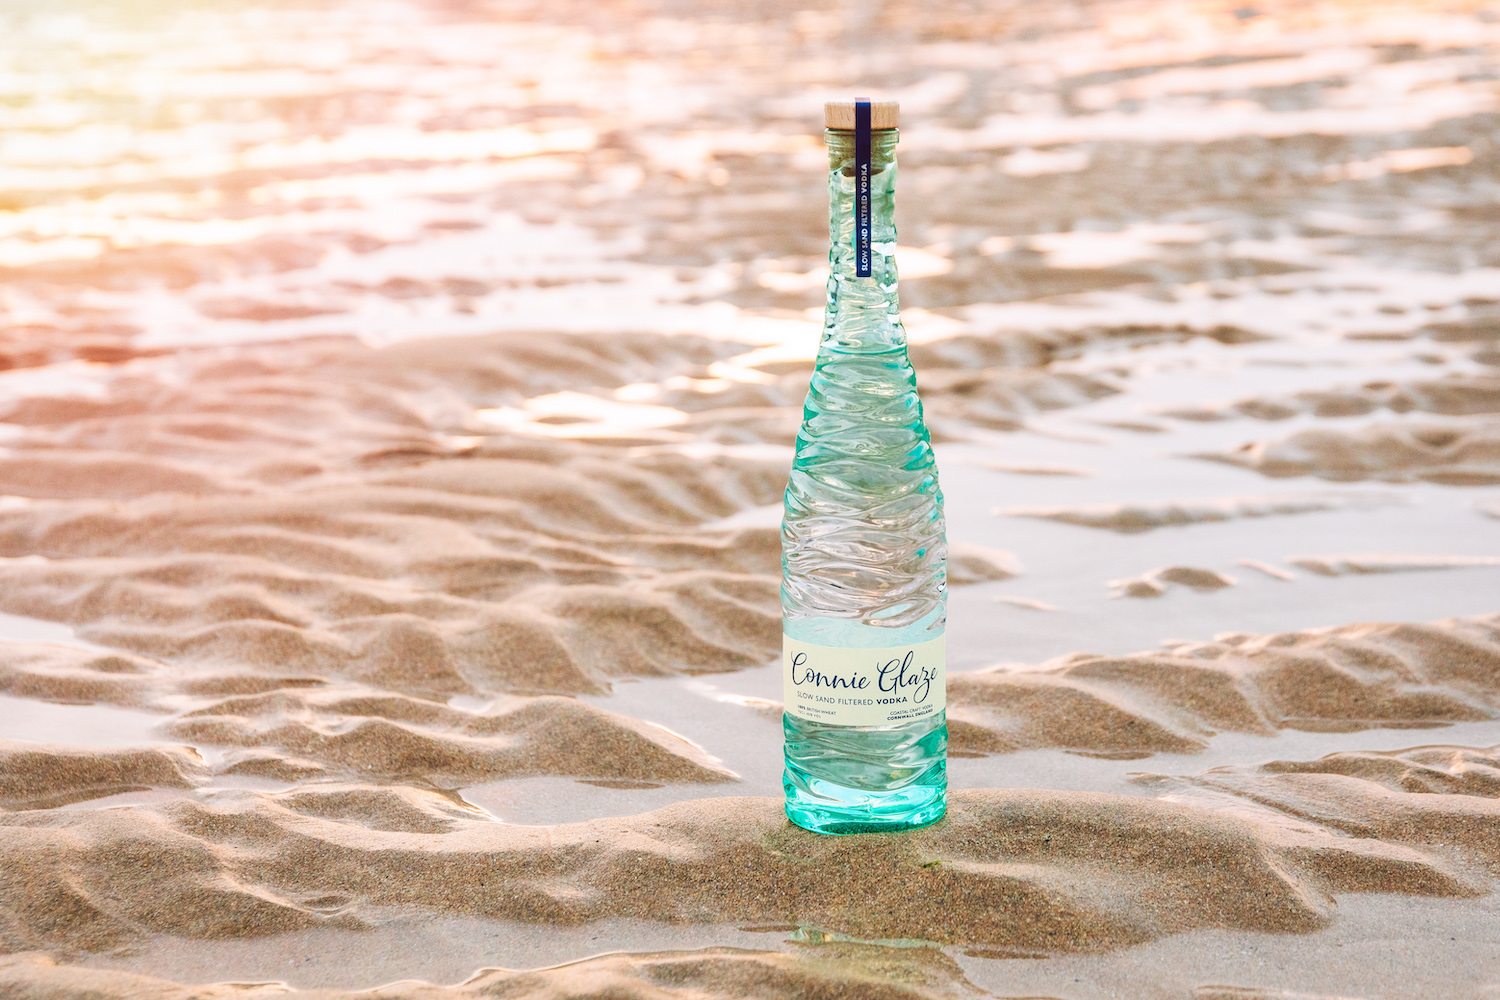 Bottle of Connie Glaze vodka on the sand Southwestern Distillery Cornwall